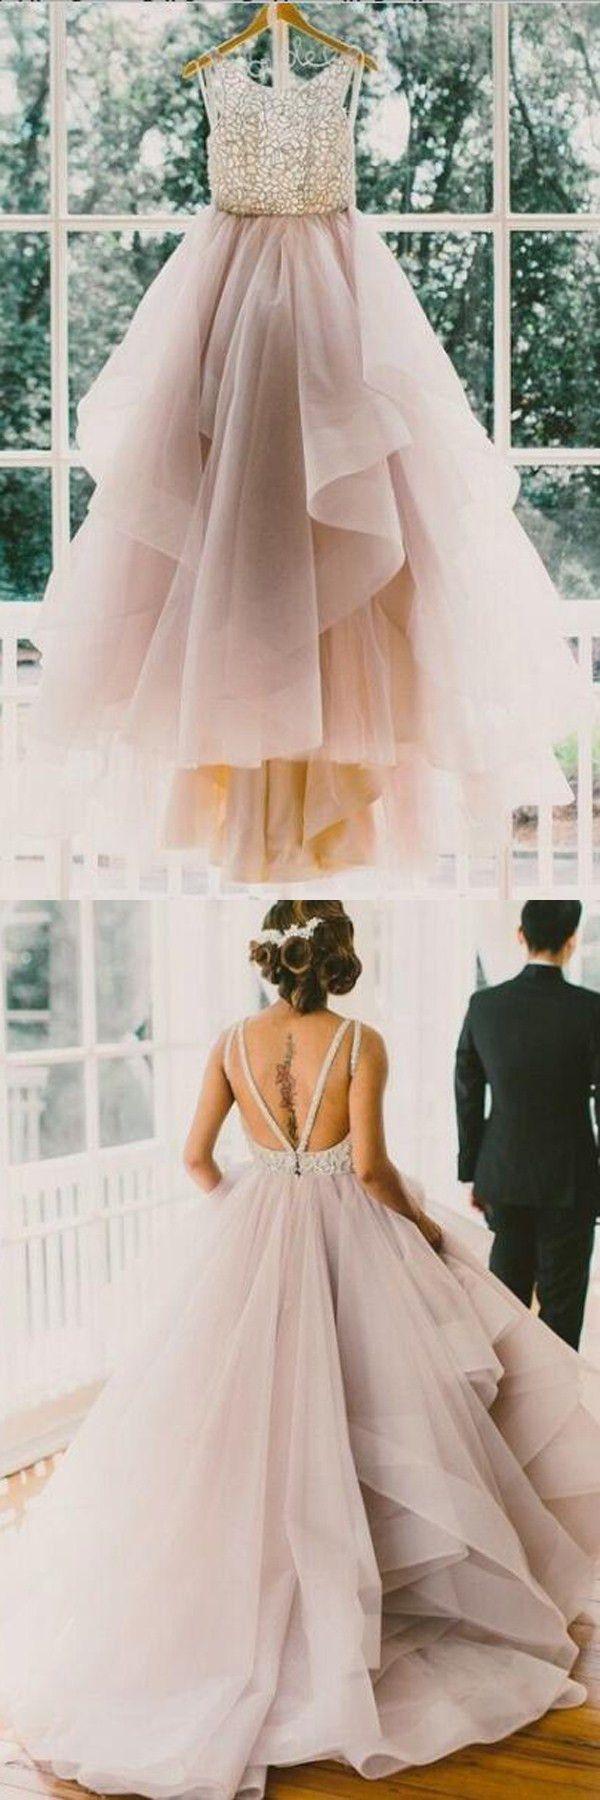 Wedding - The Perfect Fairytale Dress